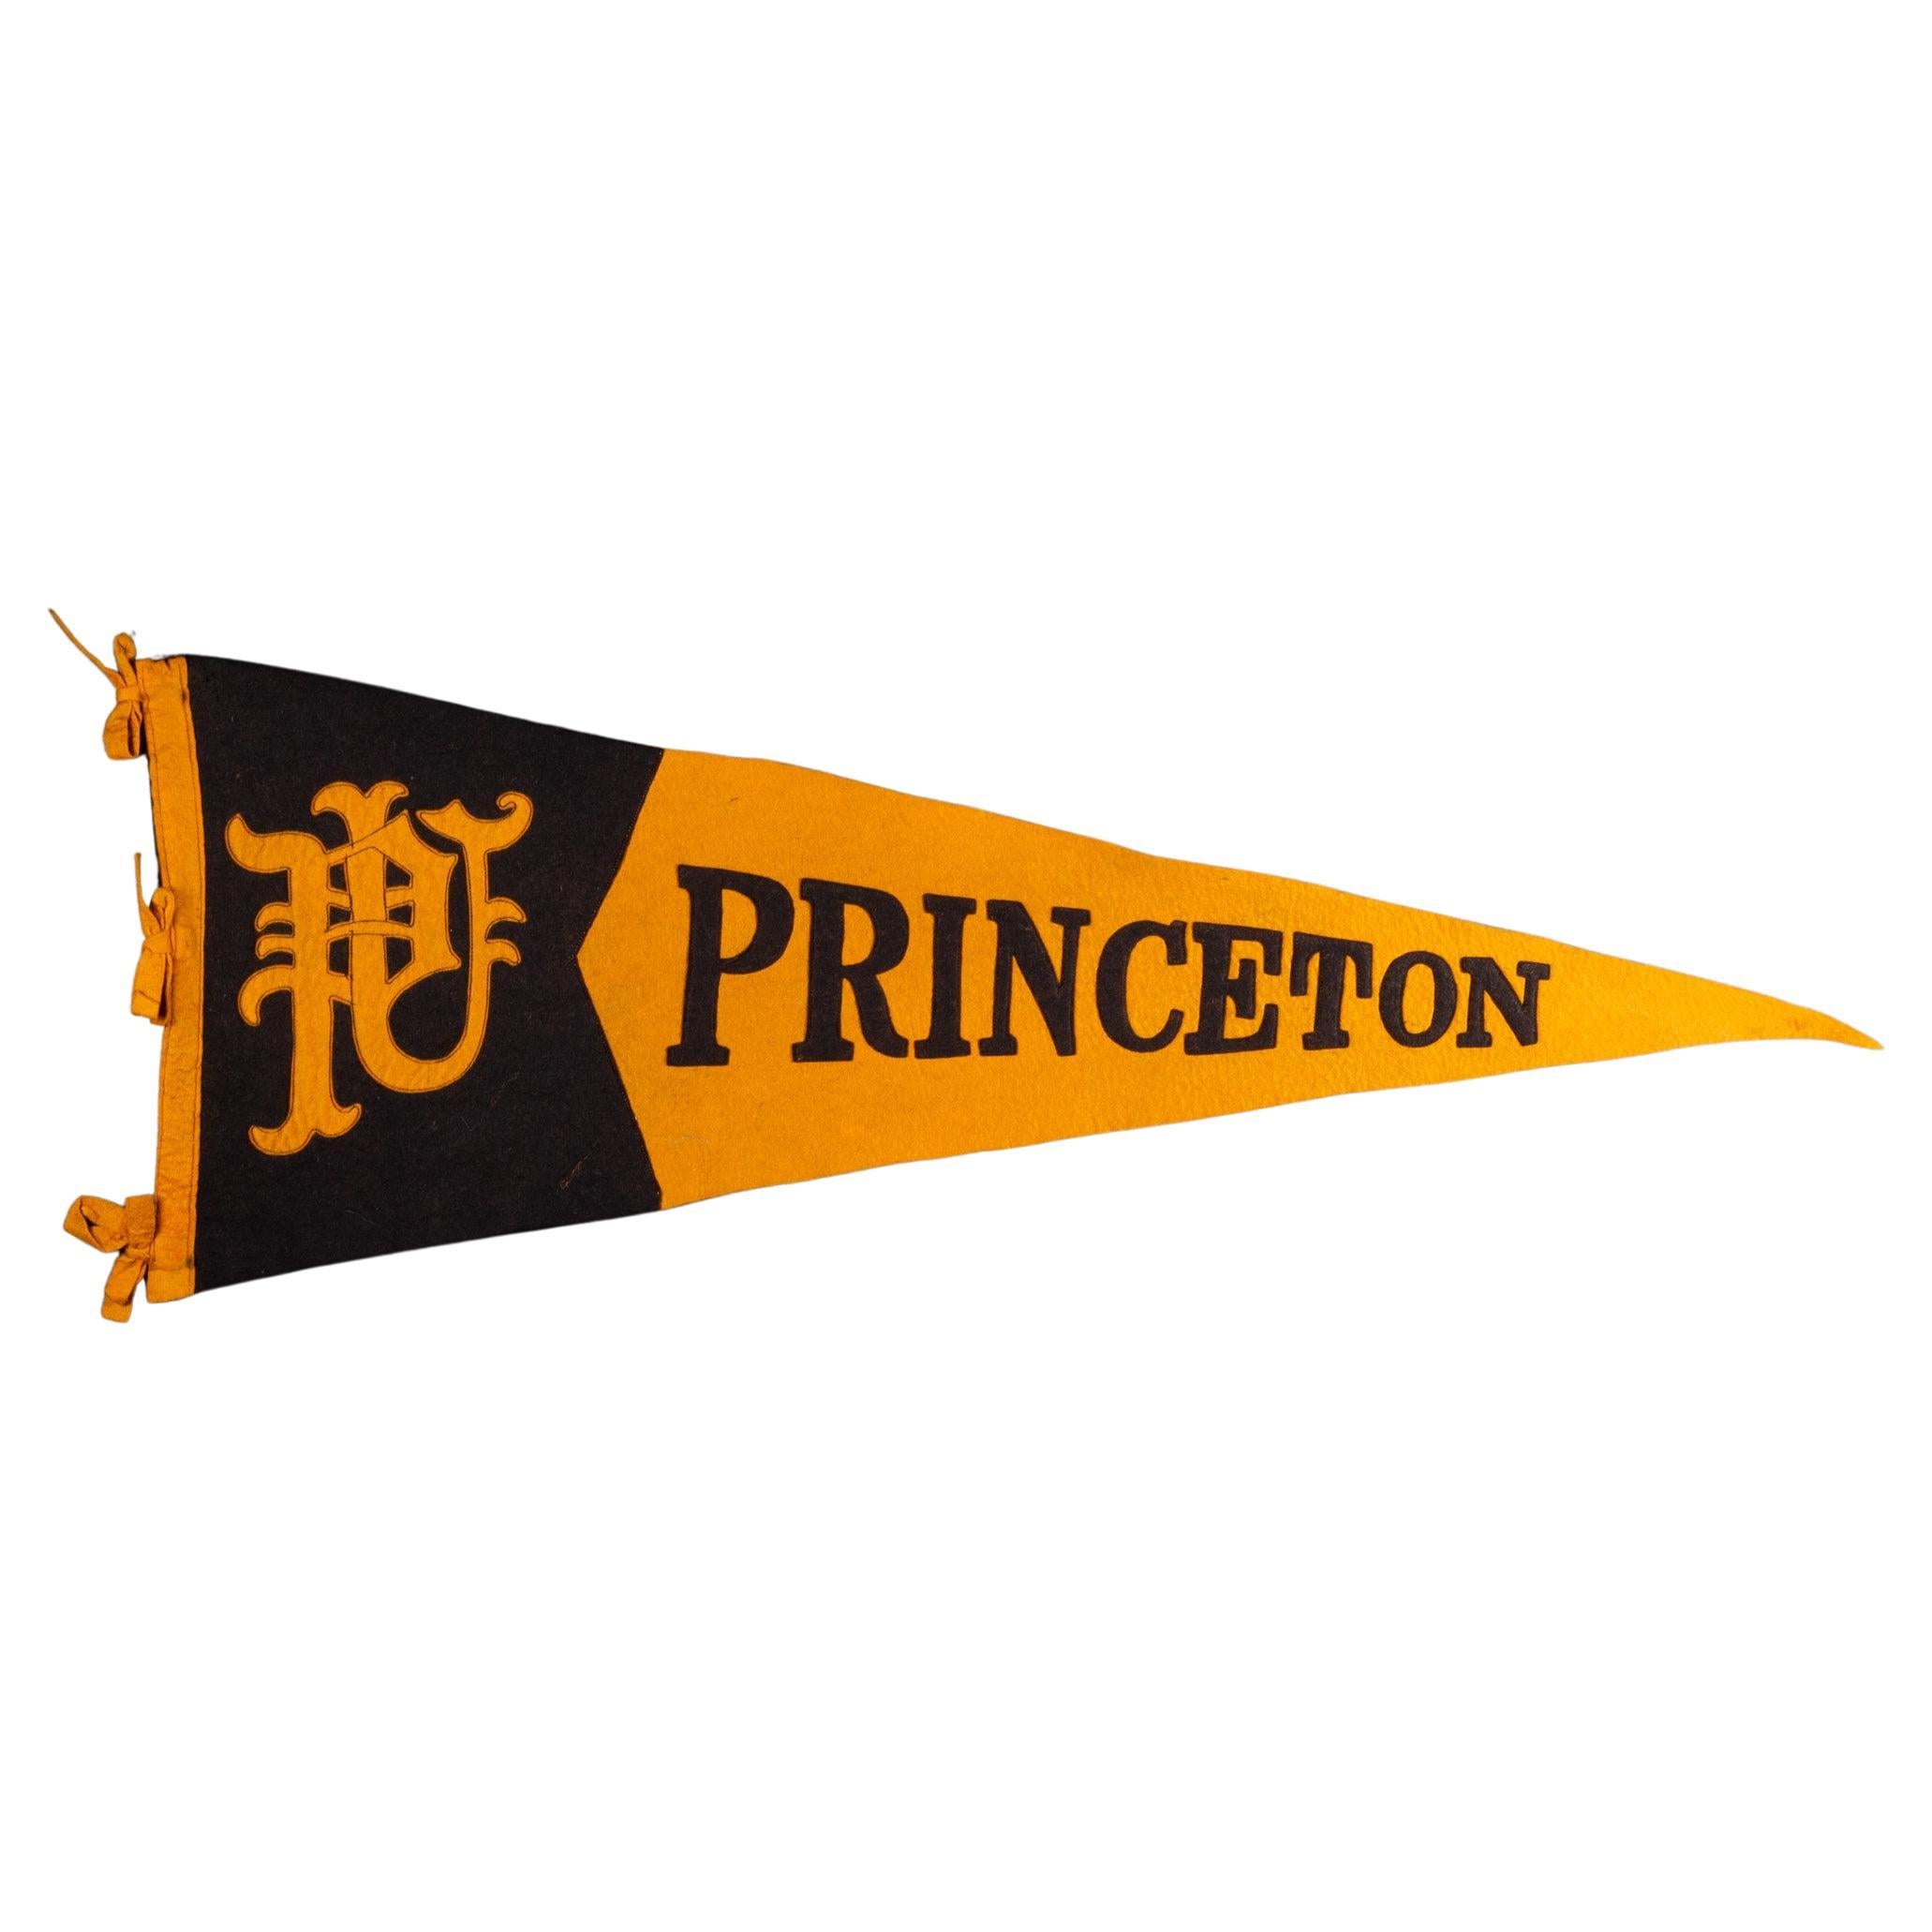 Princeton University Pennant Banner, circa 1920-1940  (FREE SHIPPING)